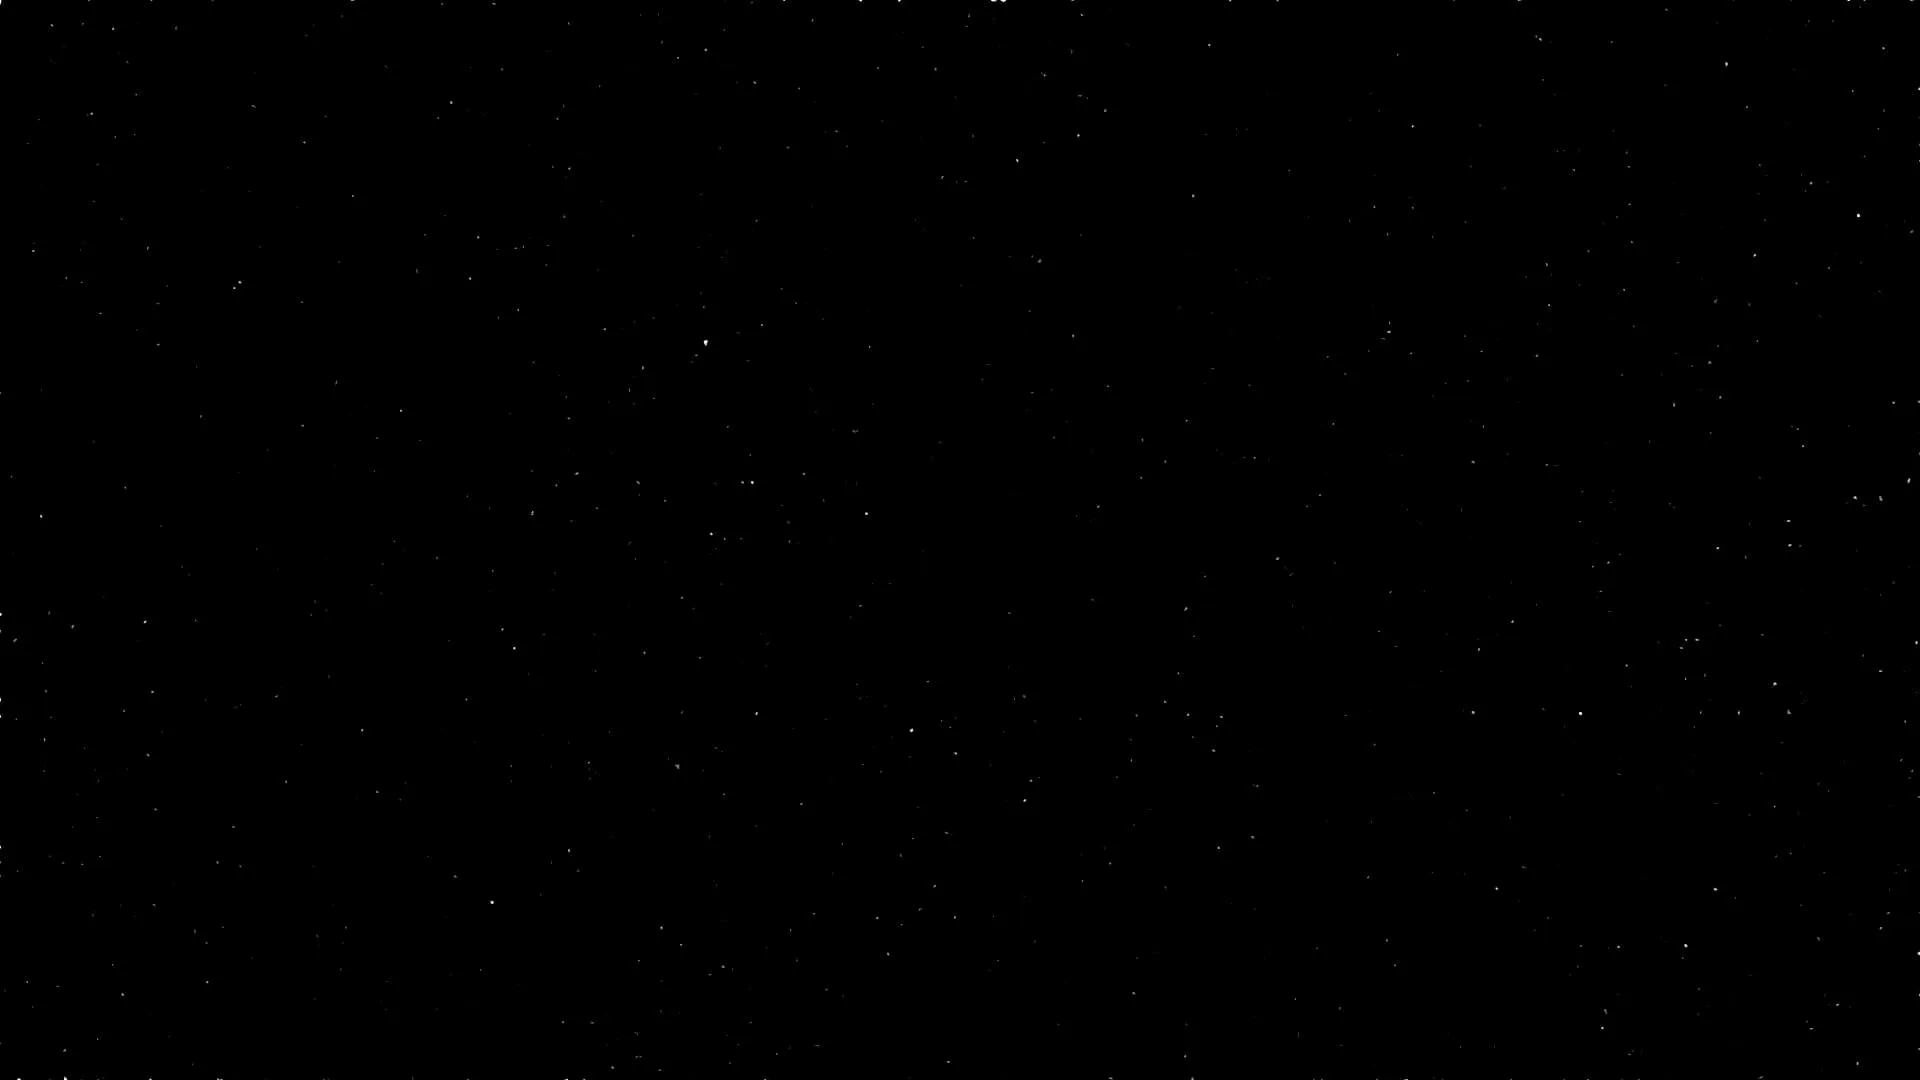 A starfield image